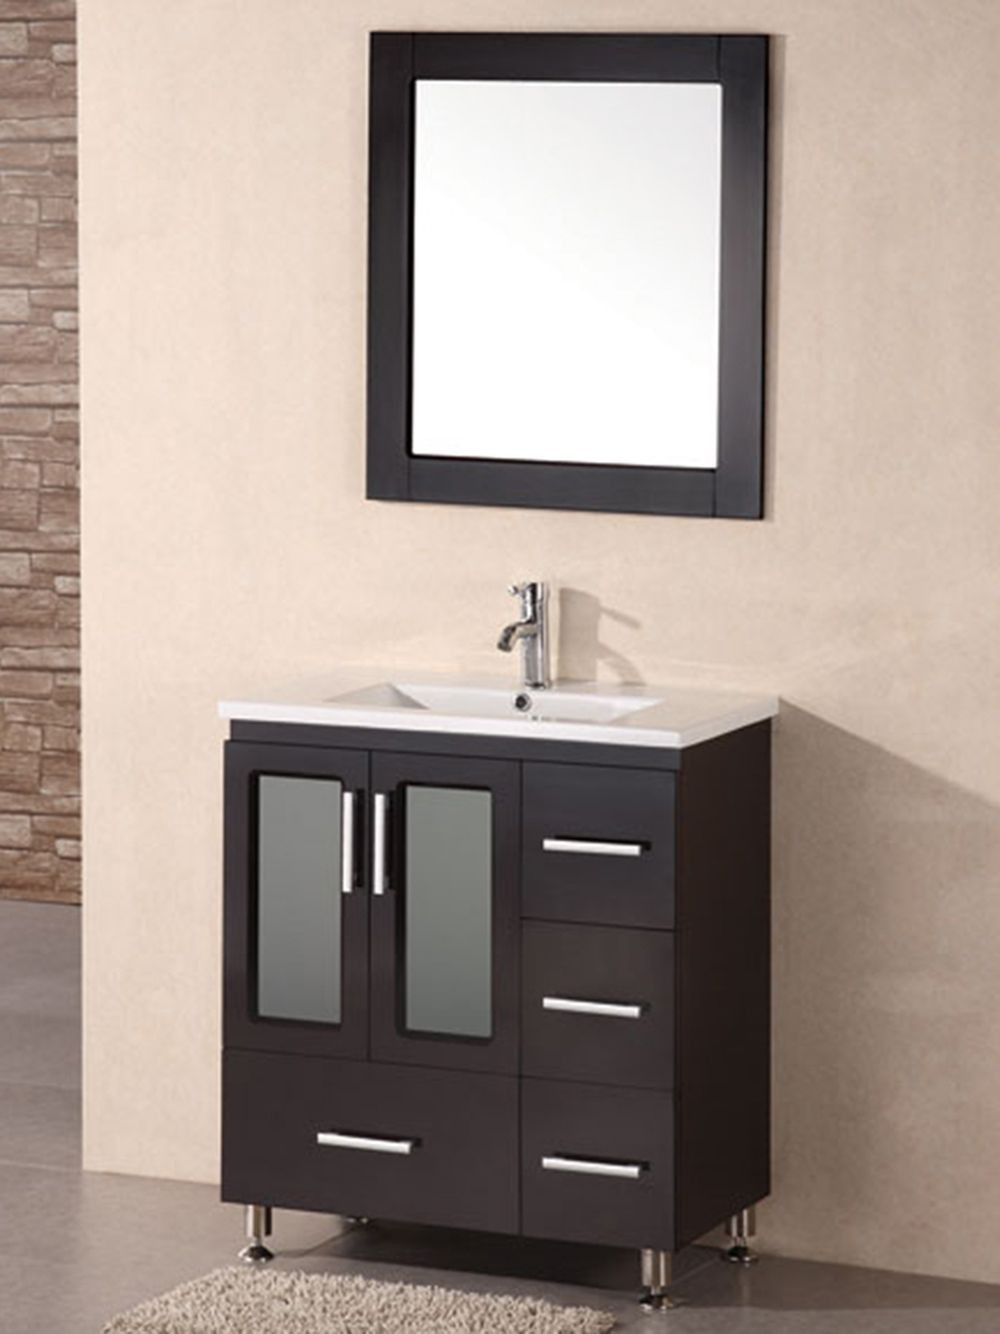 Shallow Depth Bathroom Vanity
 Applying Narrow Bathroom Vanity Ideas with Premium Service